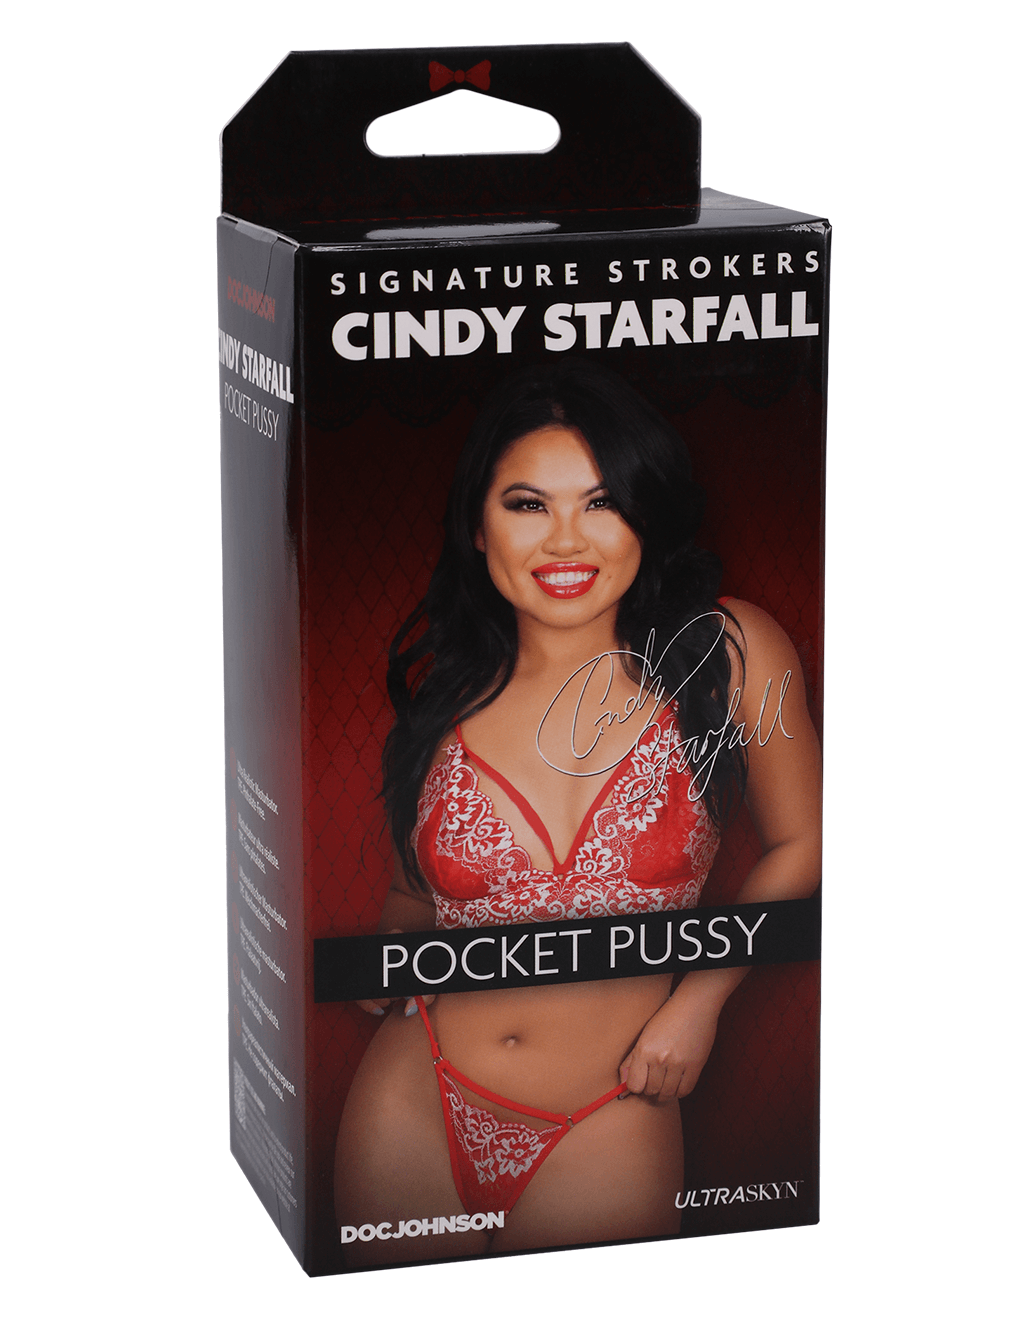 Signature Strokers Cindy Starfall Pocket Pussy - Box